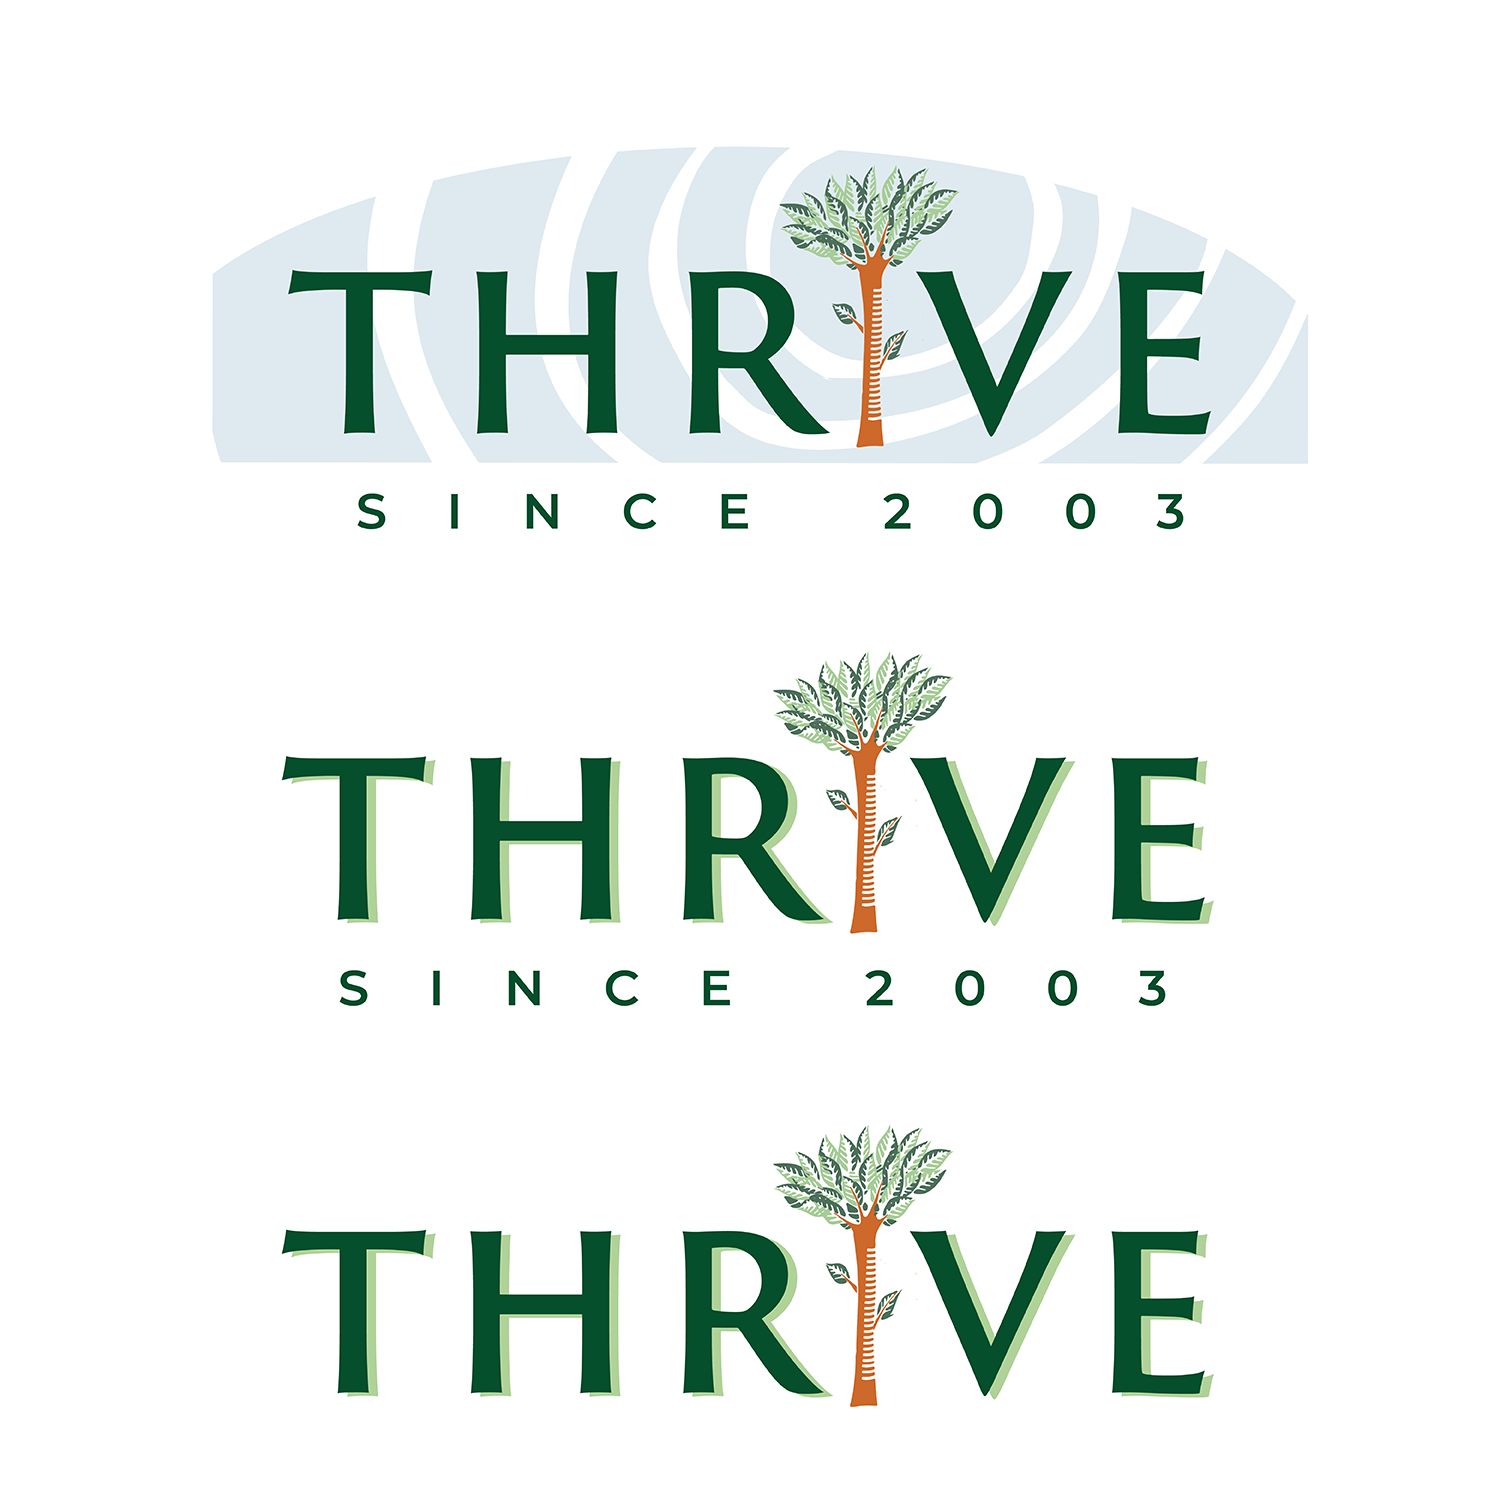 Thrive Website